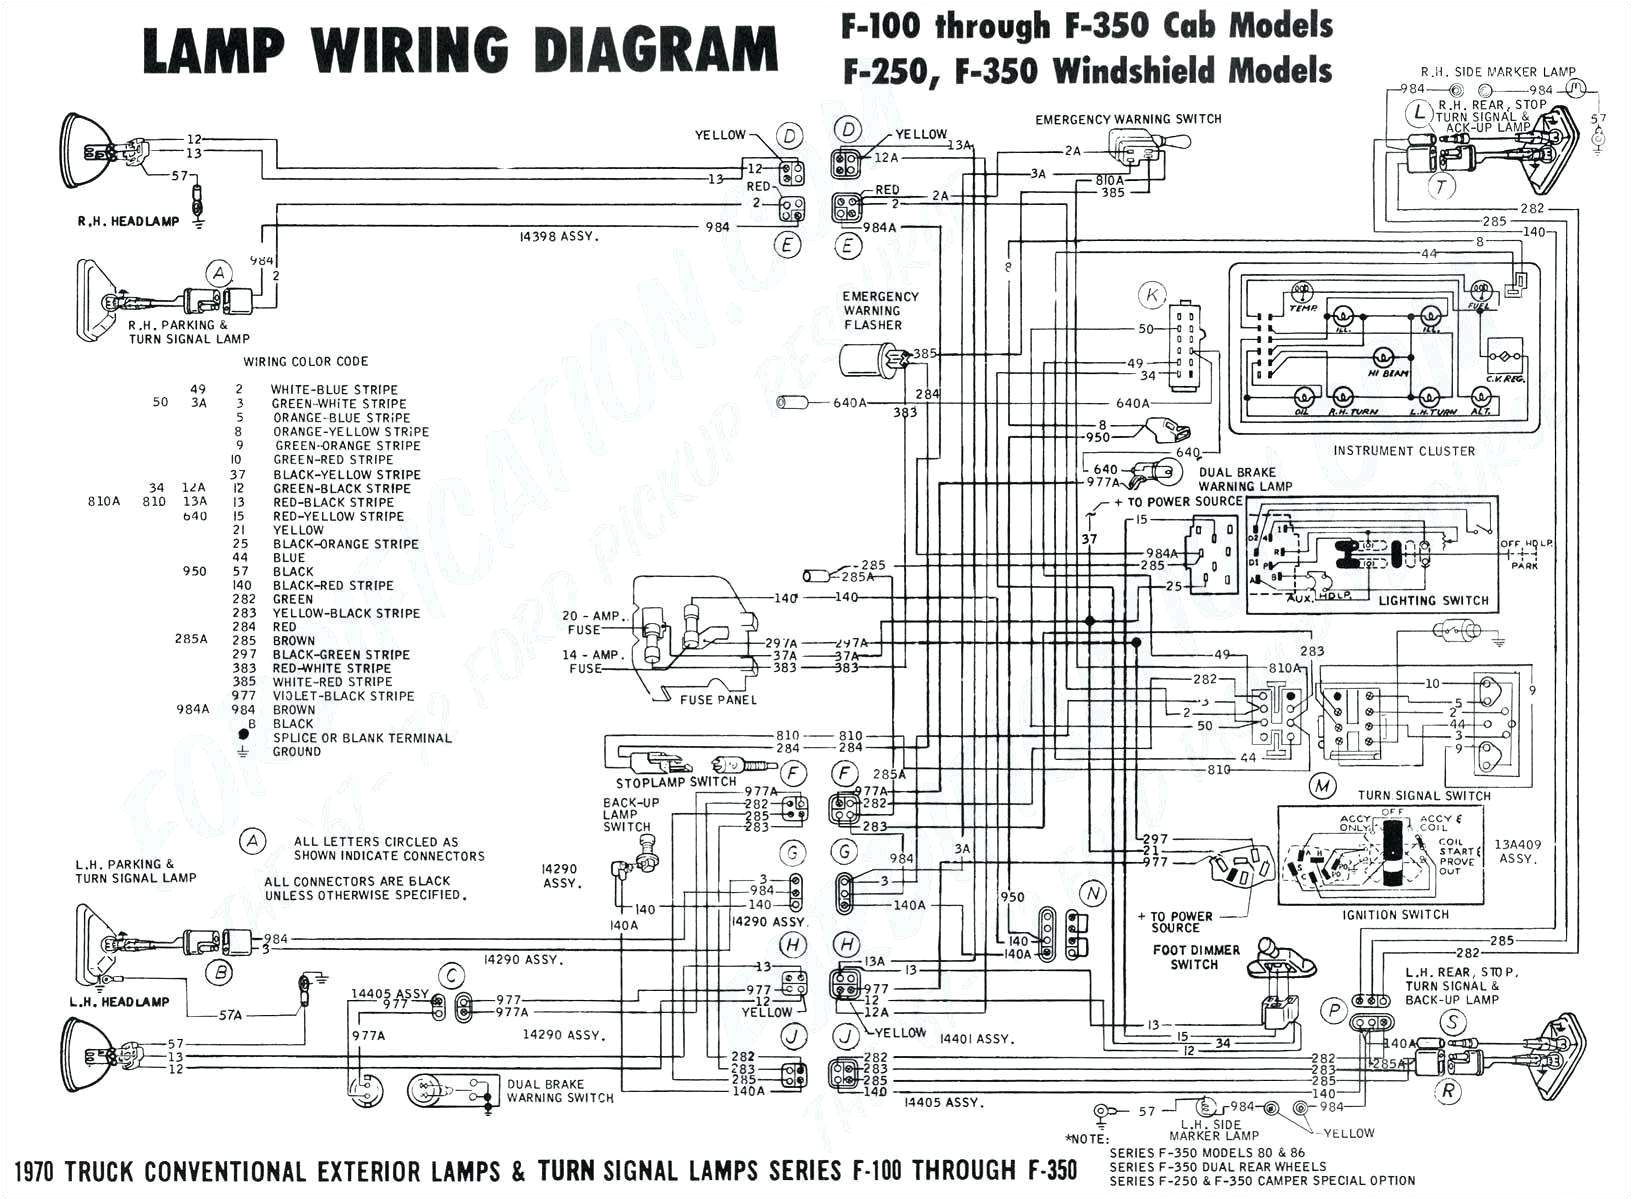 1989 dodge ram 50 wiring diagram free picture wiring diagram post 1989 dodge ramcharger wiring diagram